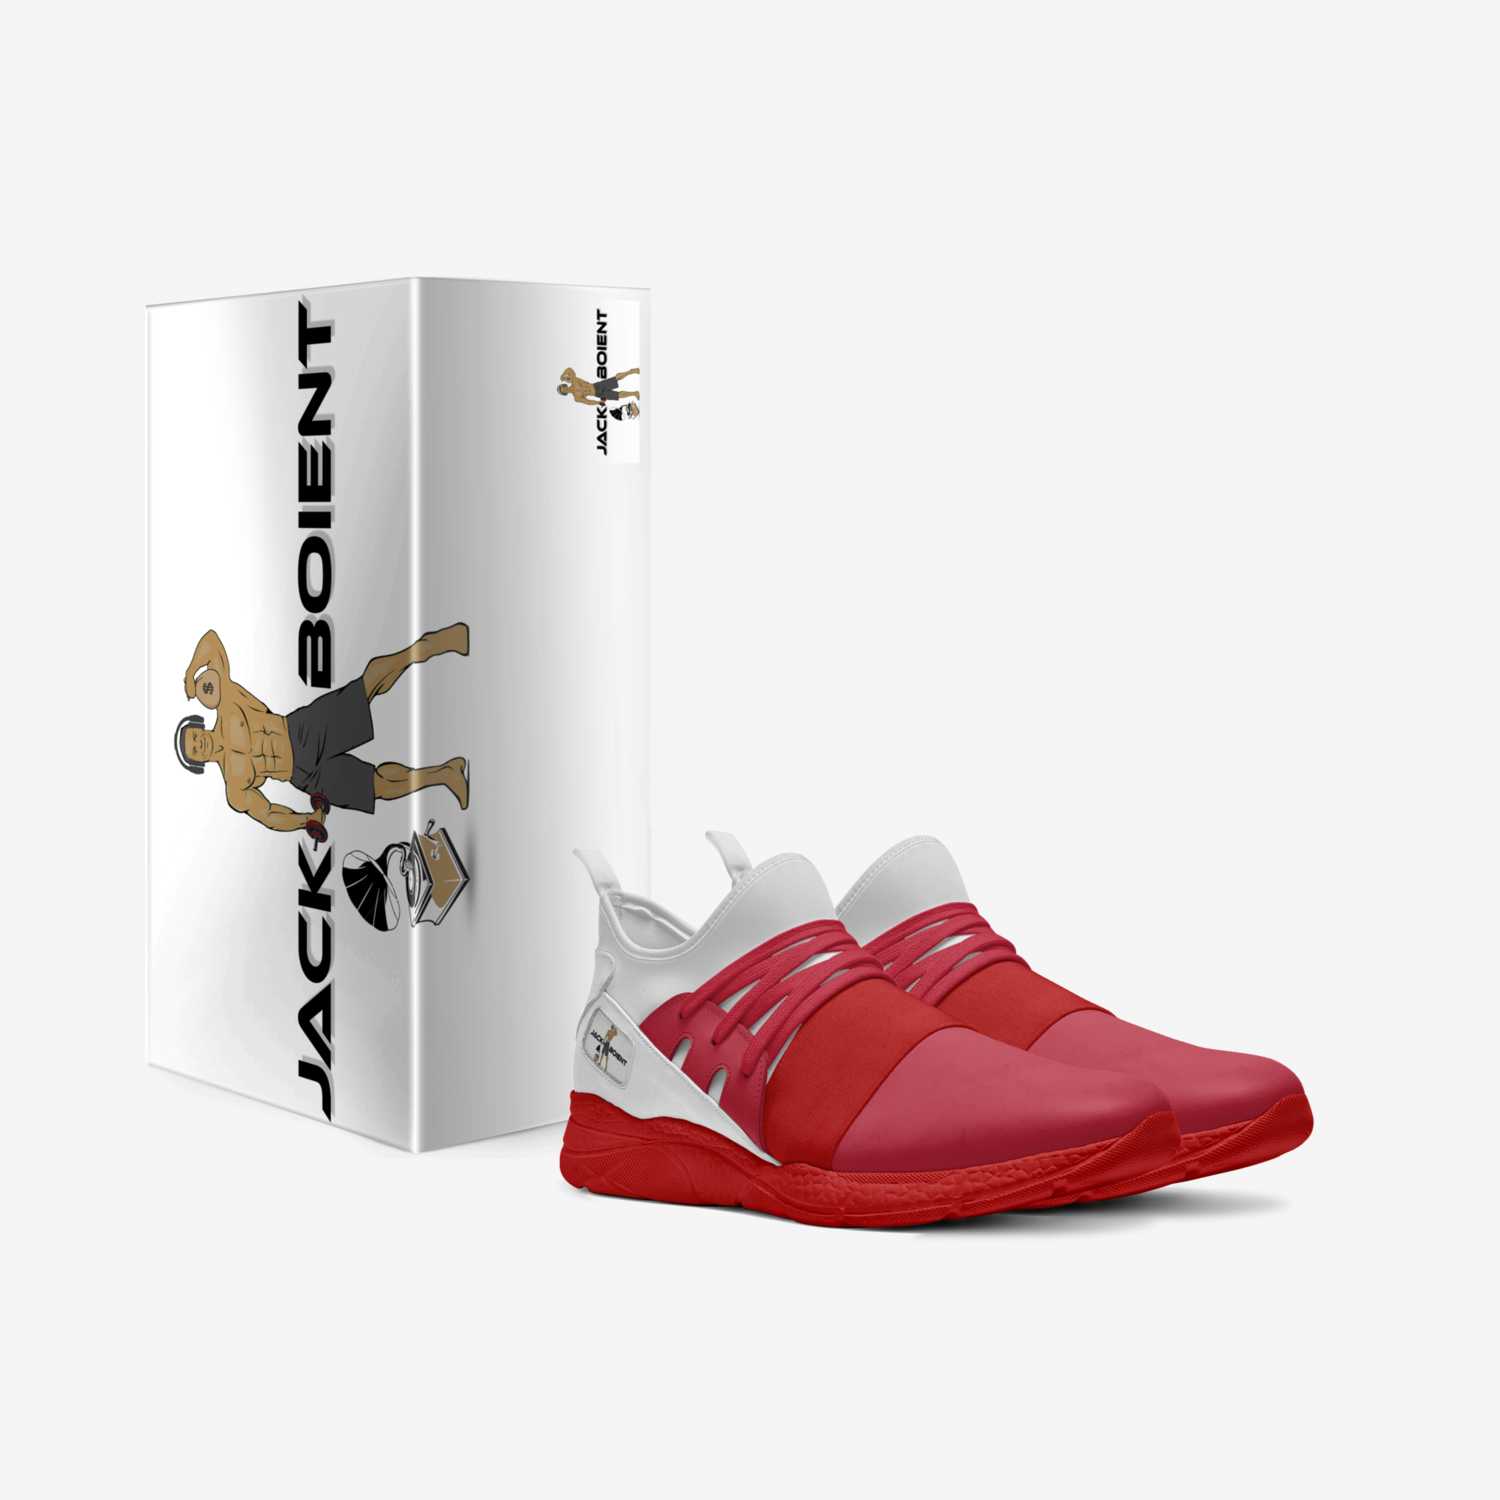 Jackboi Styles 4 custom made in Italy shoes by Jeremy Buntyn | Box view